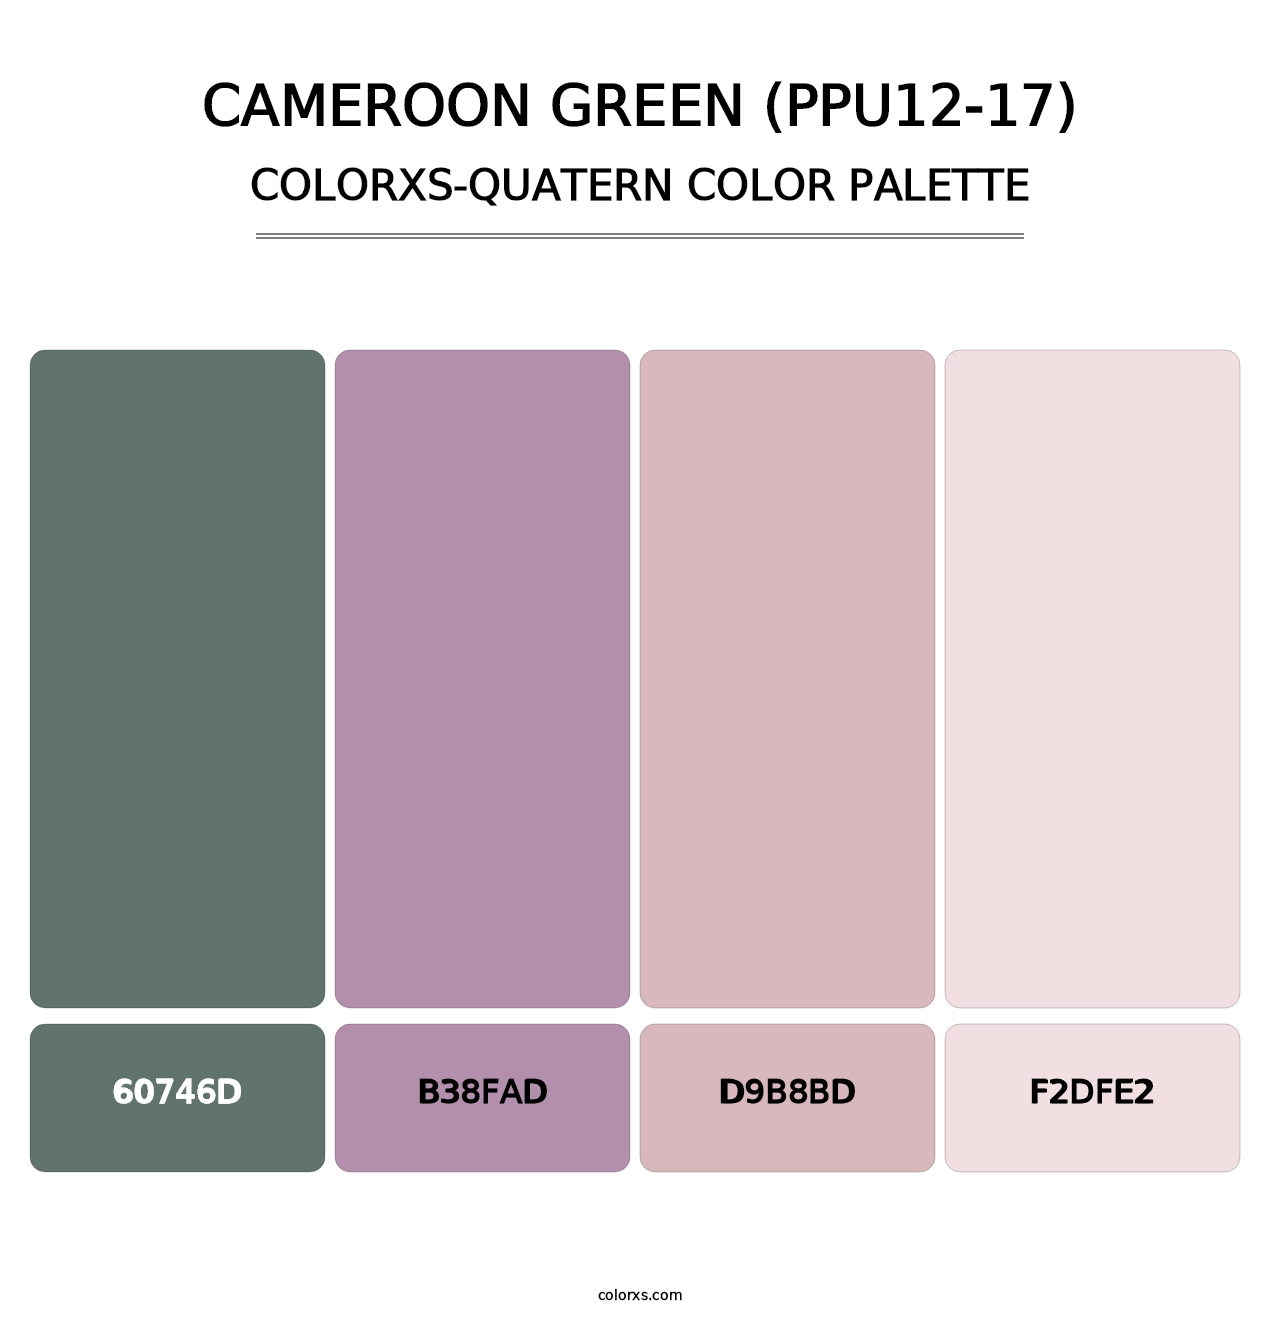 Cameroon Green (PPU12-17) - Colorxs Quatern Palette